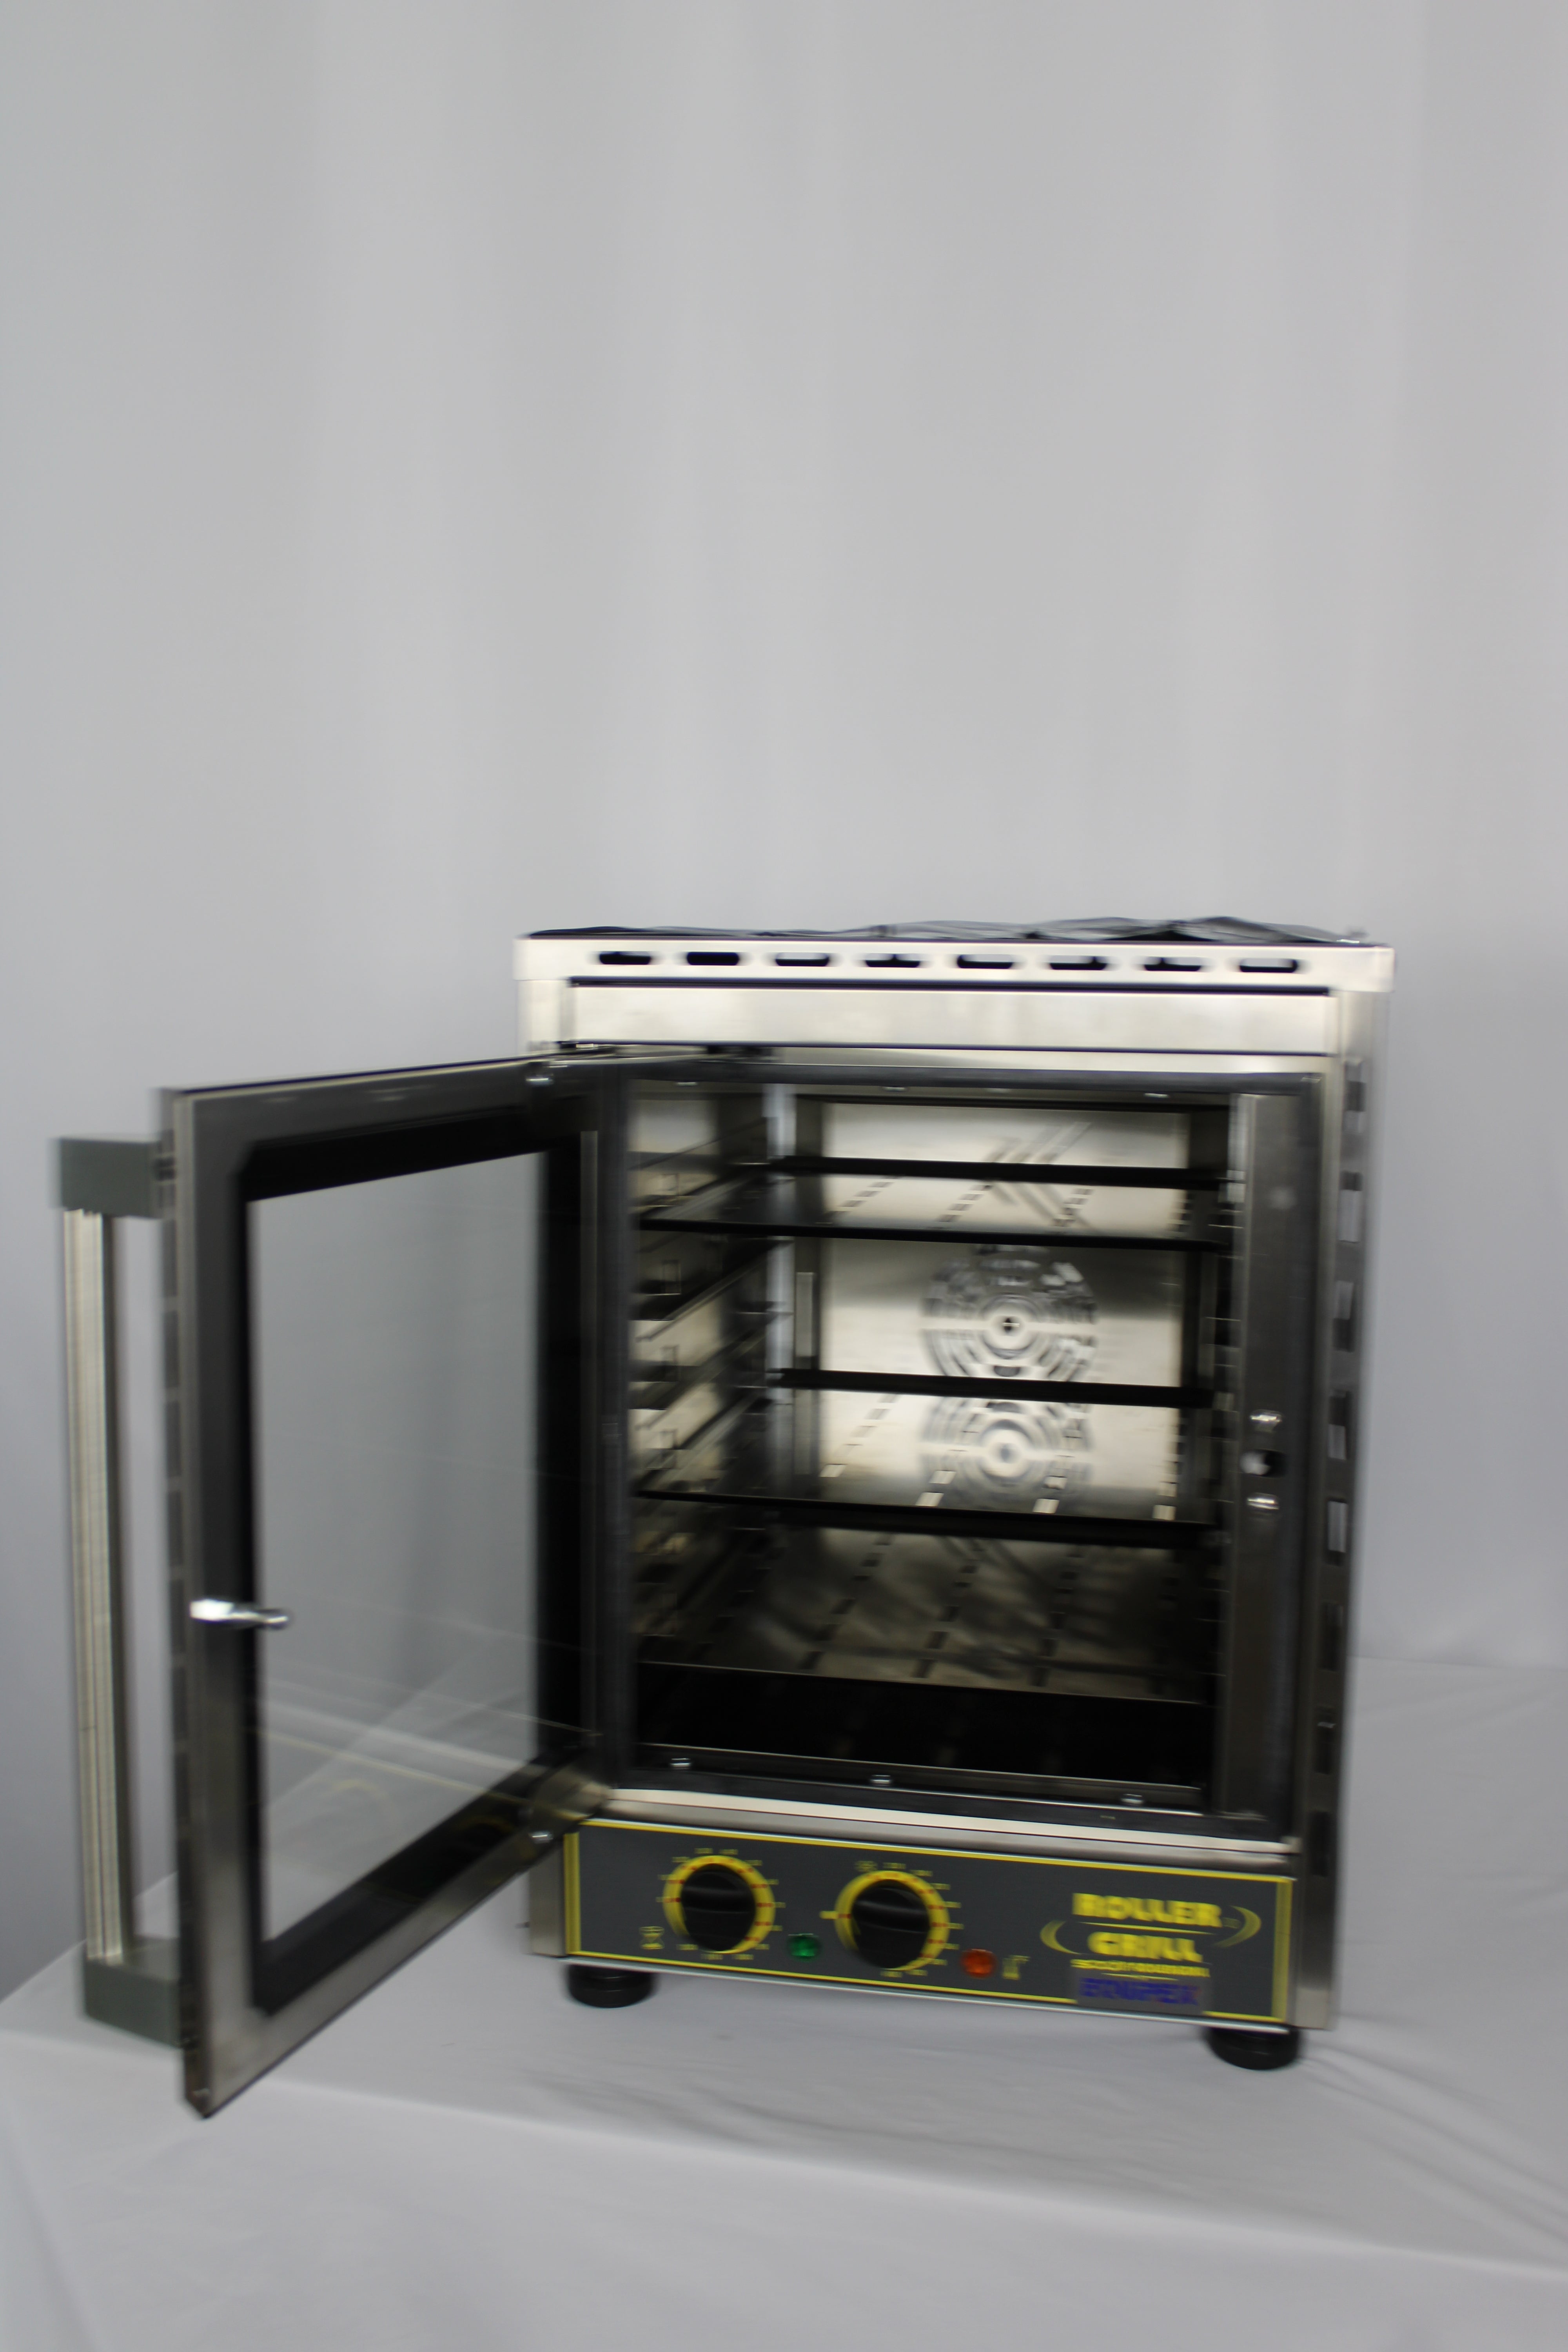 *Open Box* Equipex FC-280V/1 Sodir-Roller Grill Countertop Convection Oven